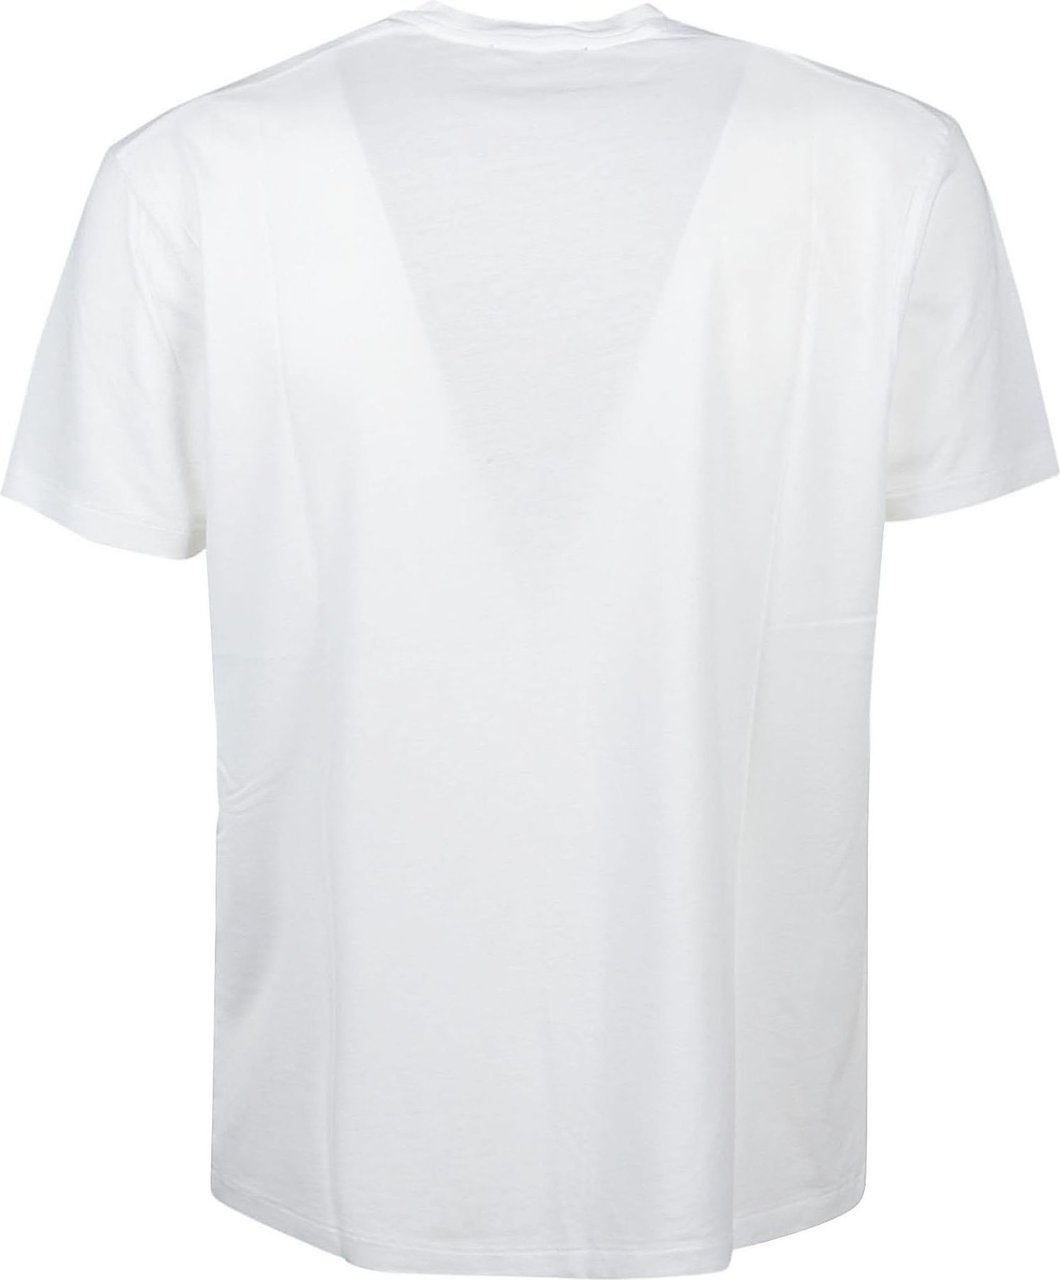 Tom Ford T-shirt White Wit